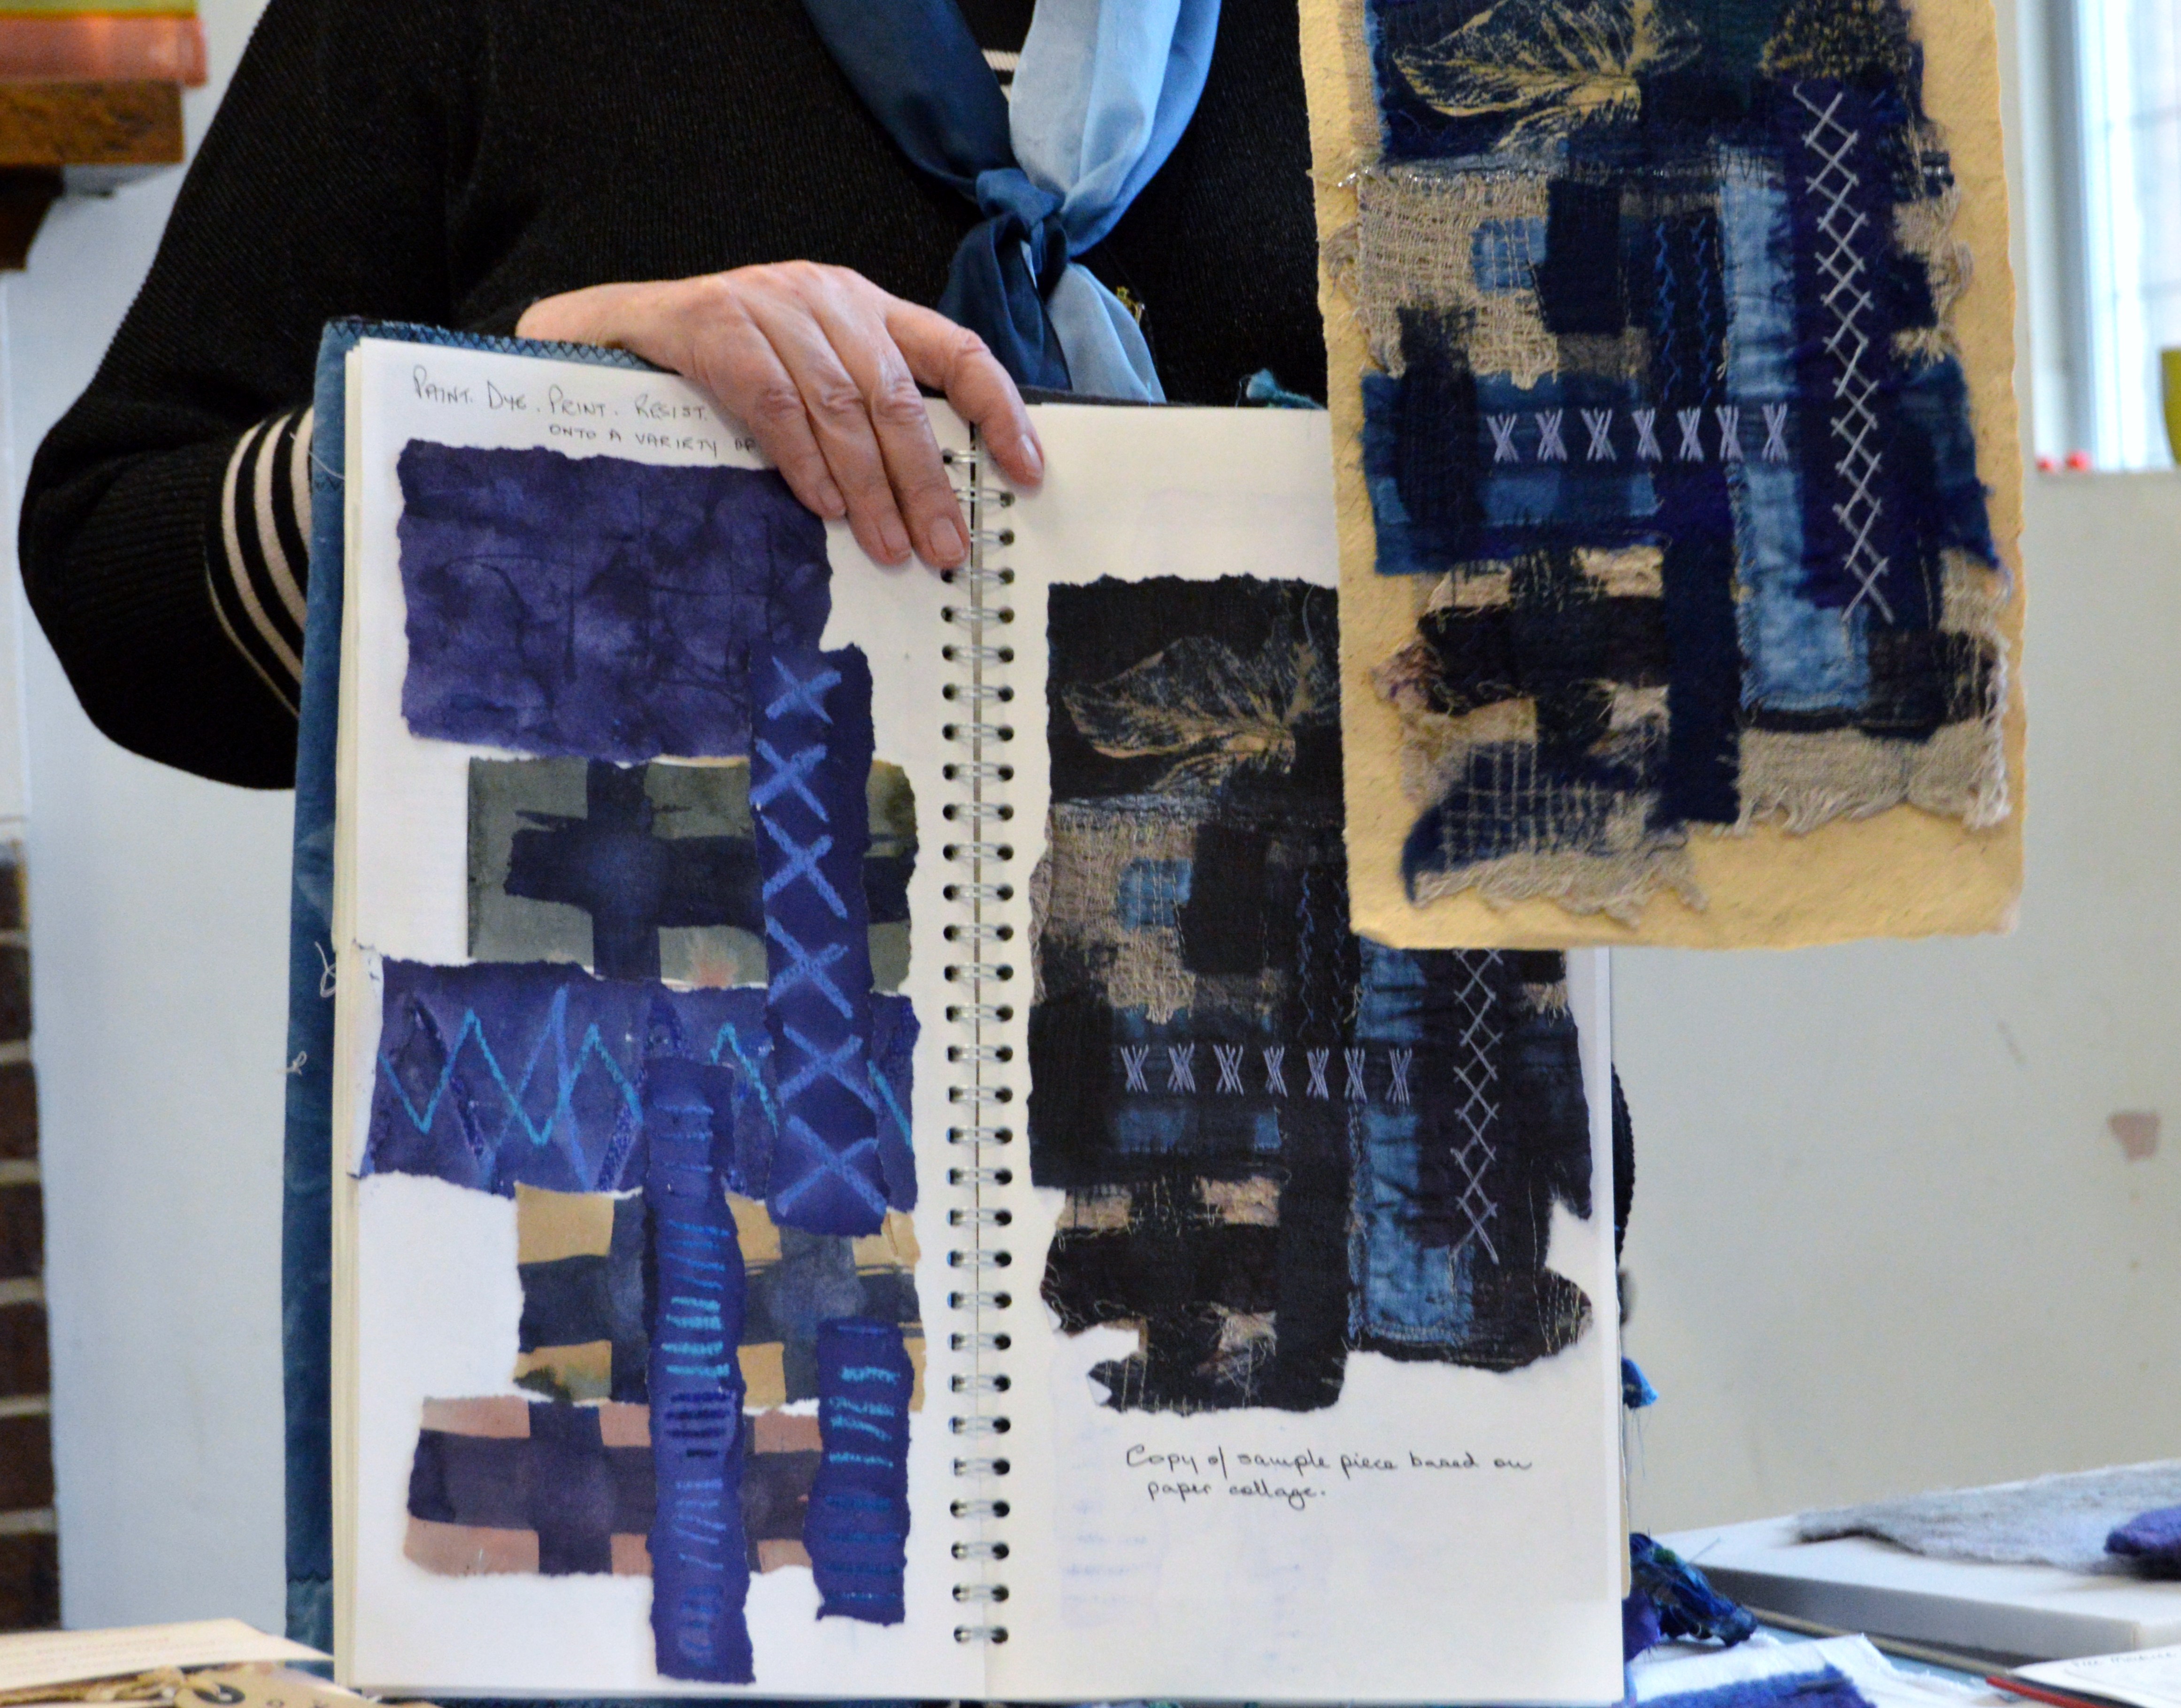 samples of work by Sandra Kedzlie for "Blue Threads" exhibition